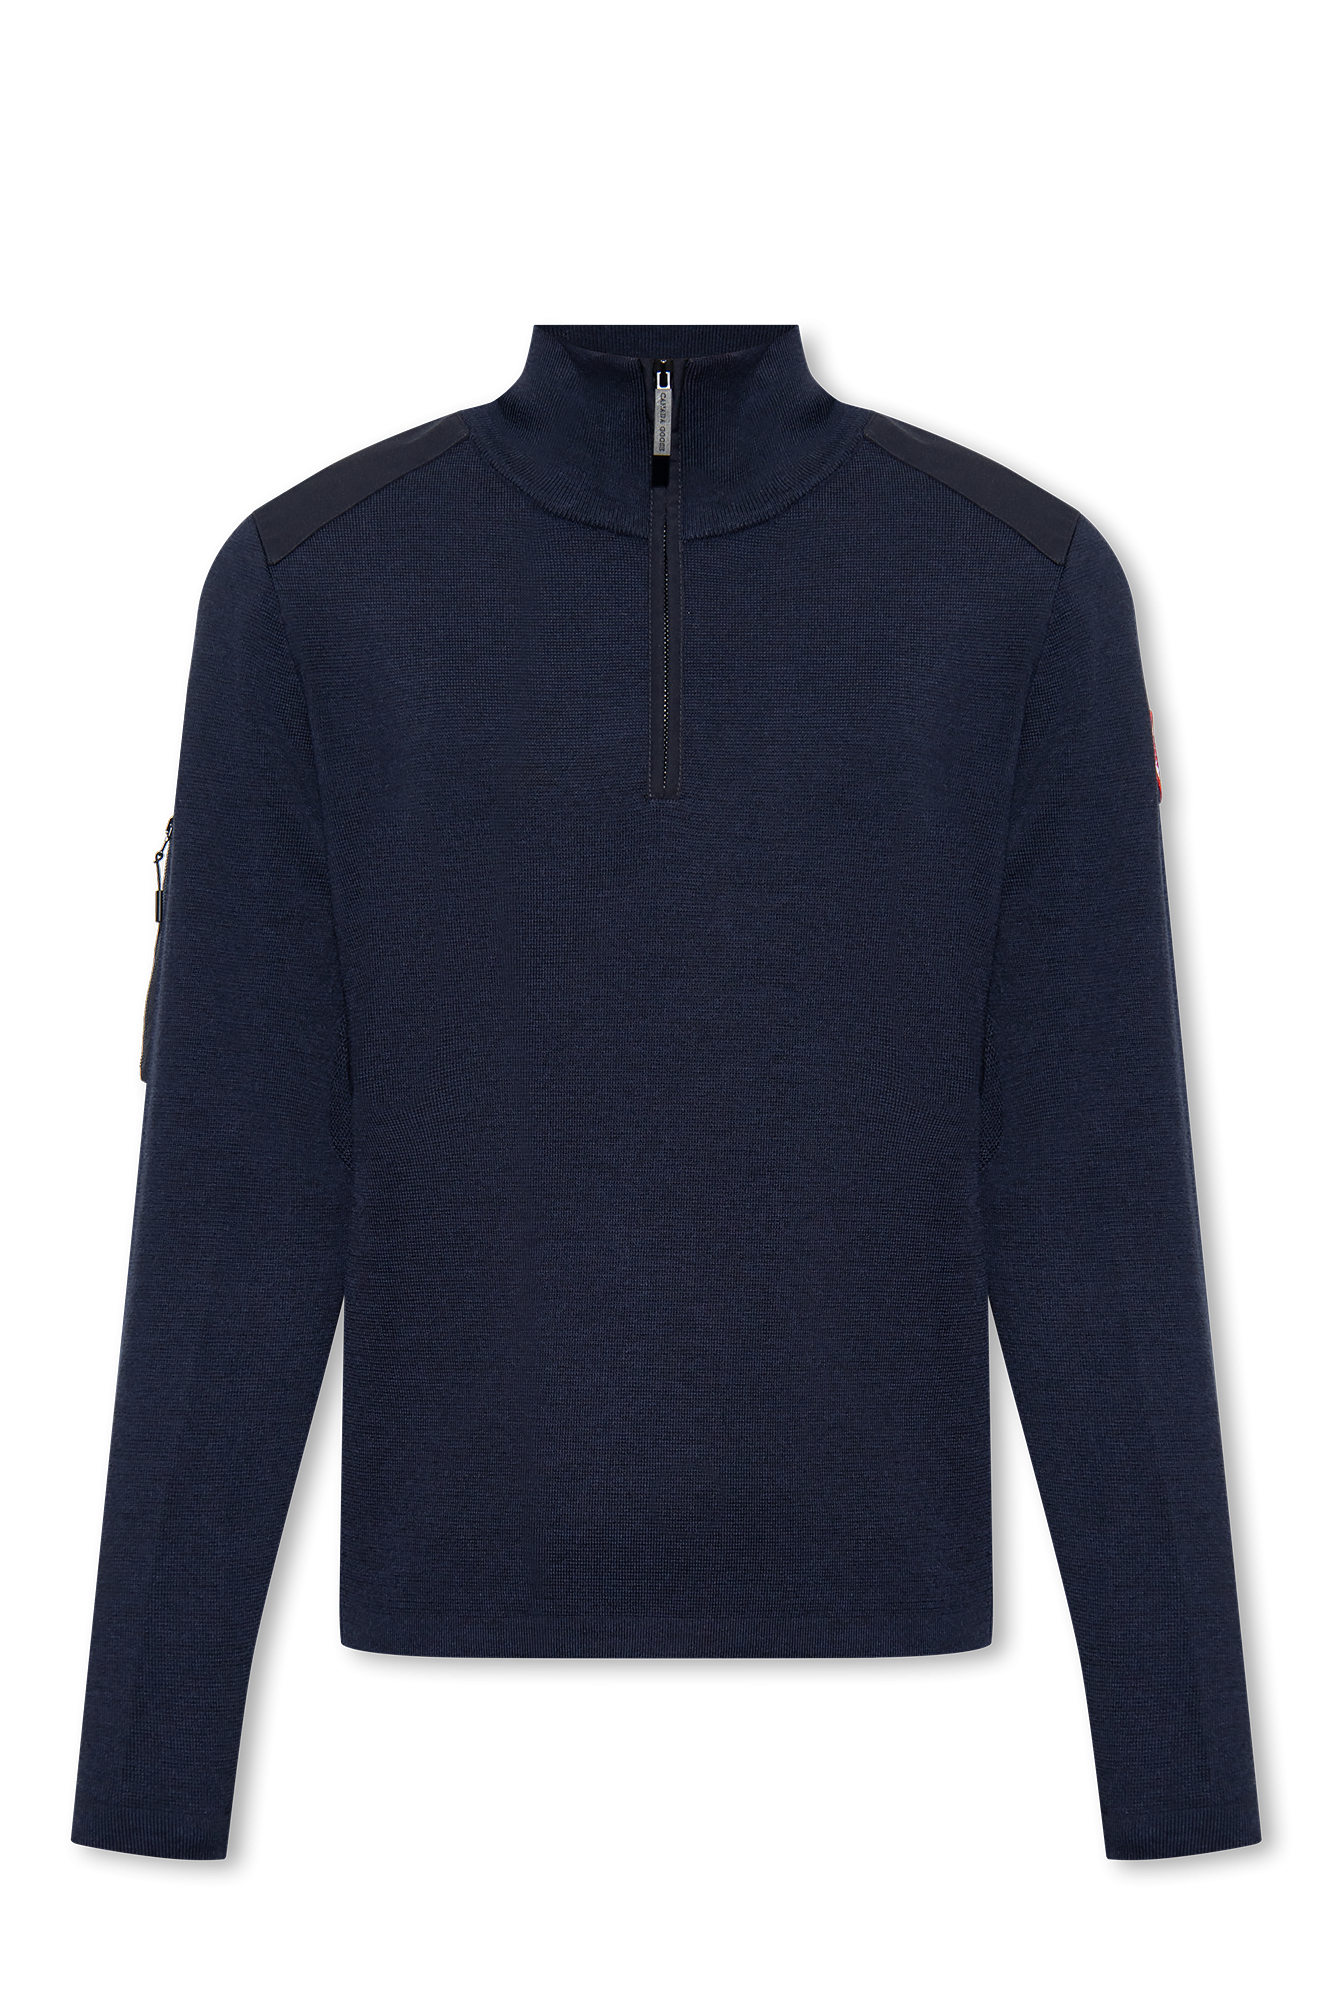 Canada Goose ‘Stormont’ turtleneck sweater